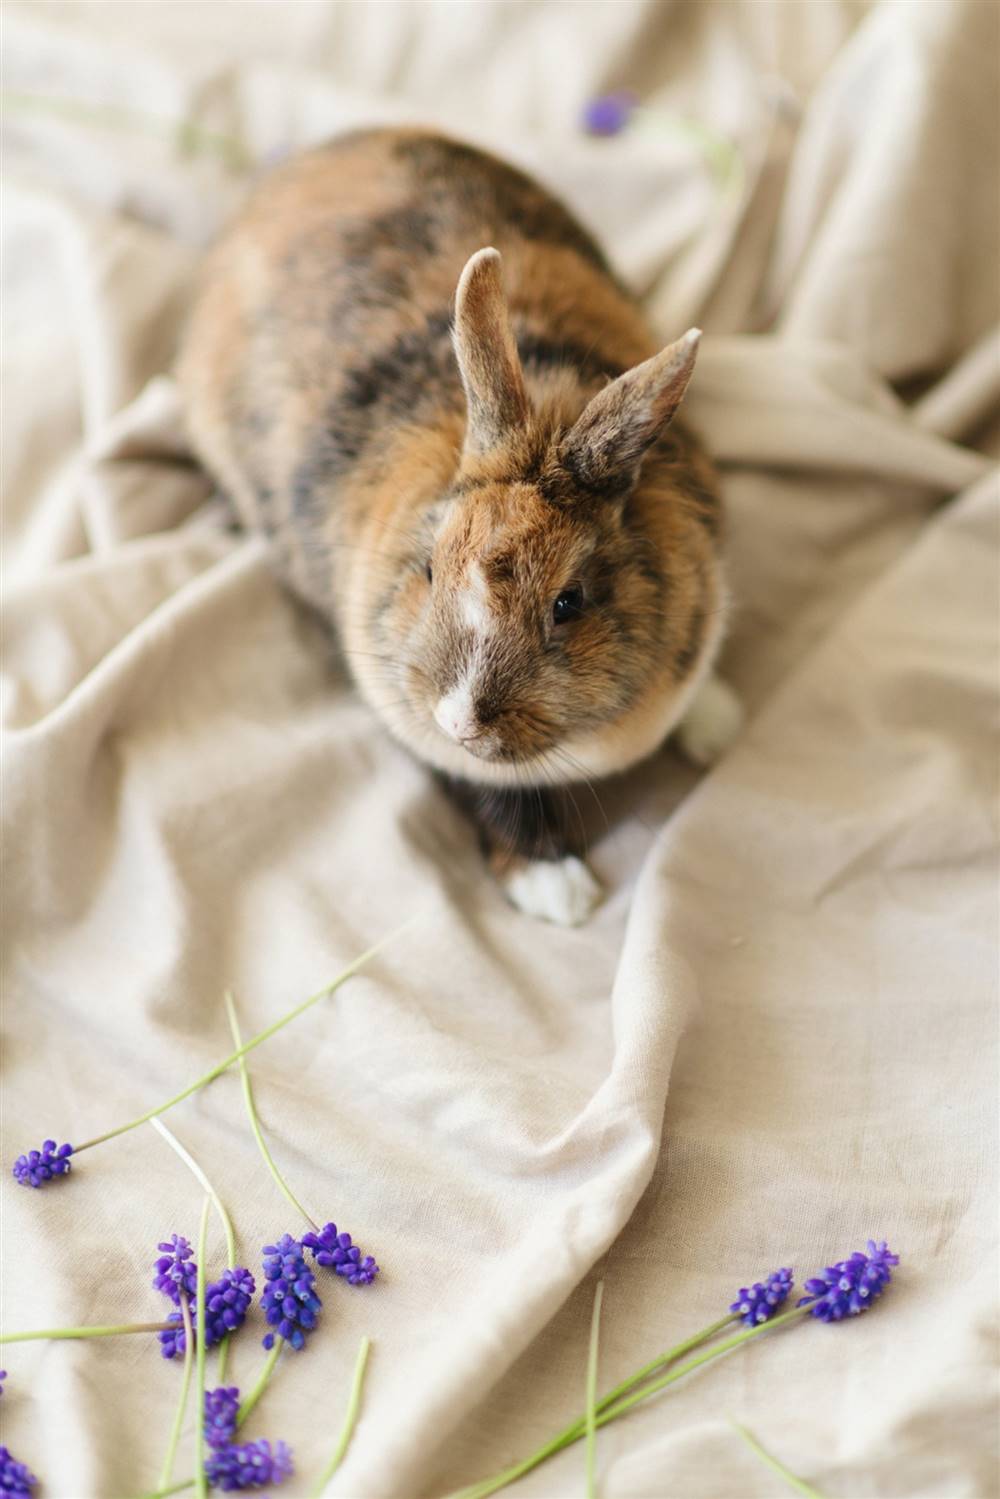 Conejo tumbado sobre una sábana.